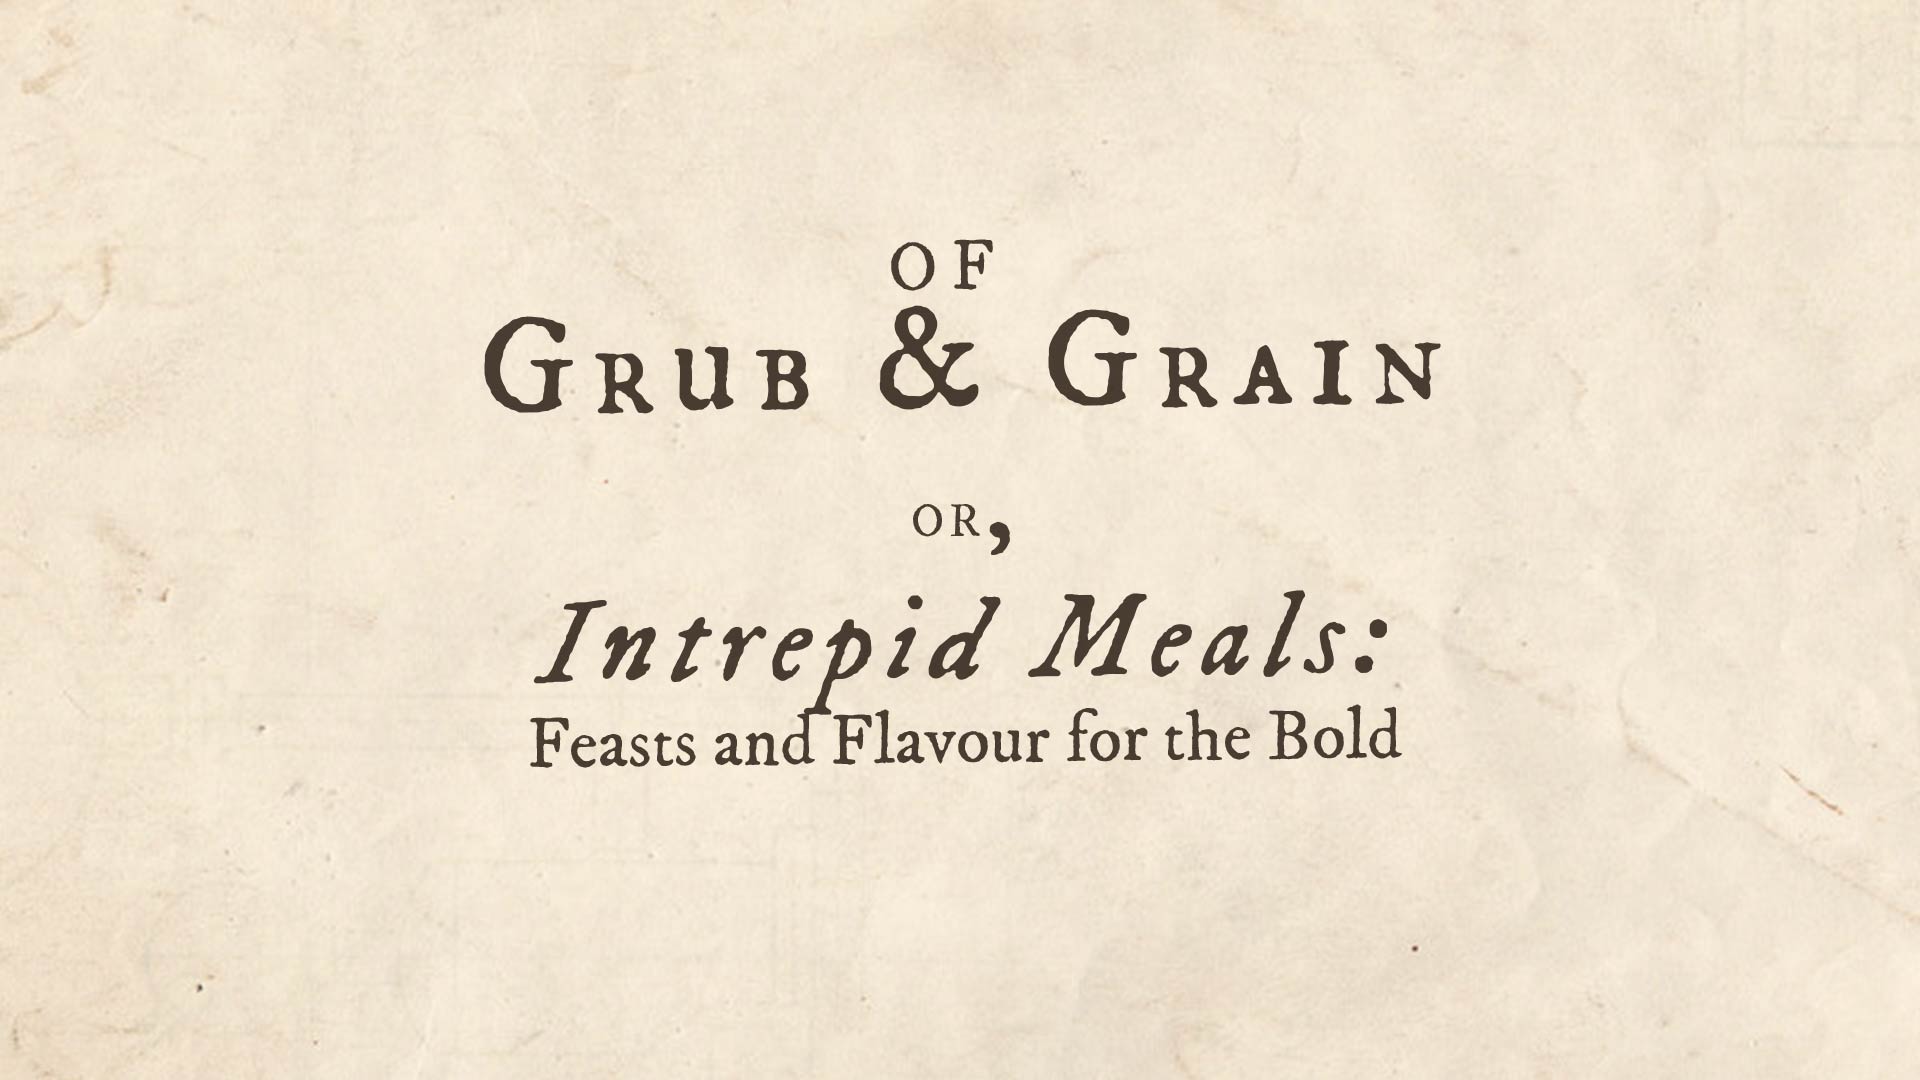 Of Grub & Grain